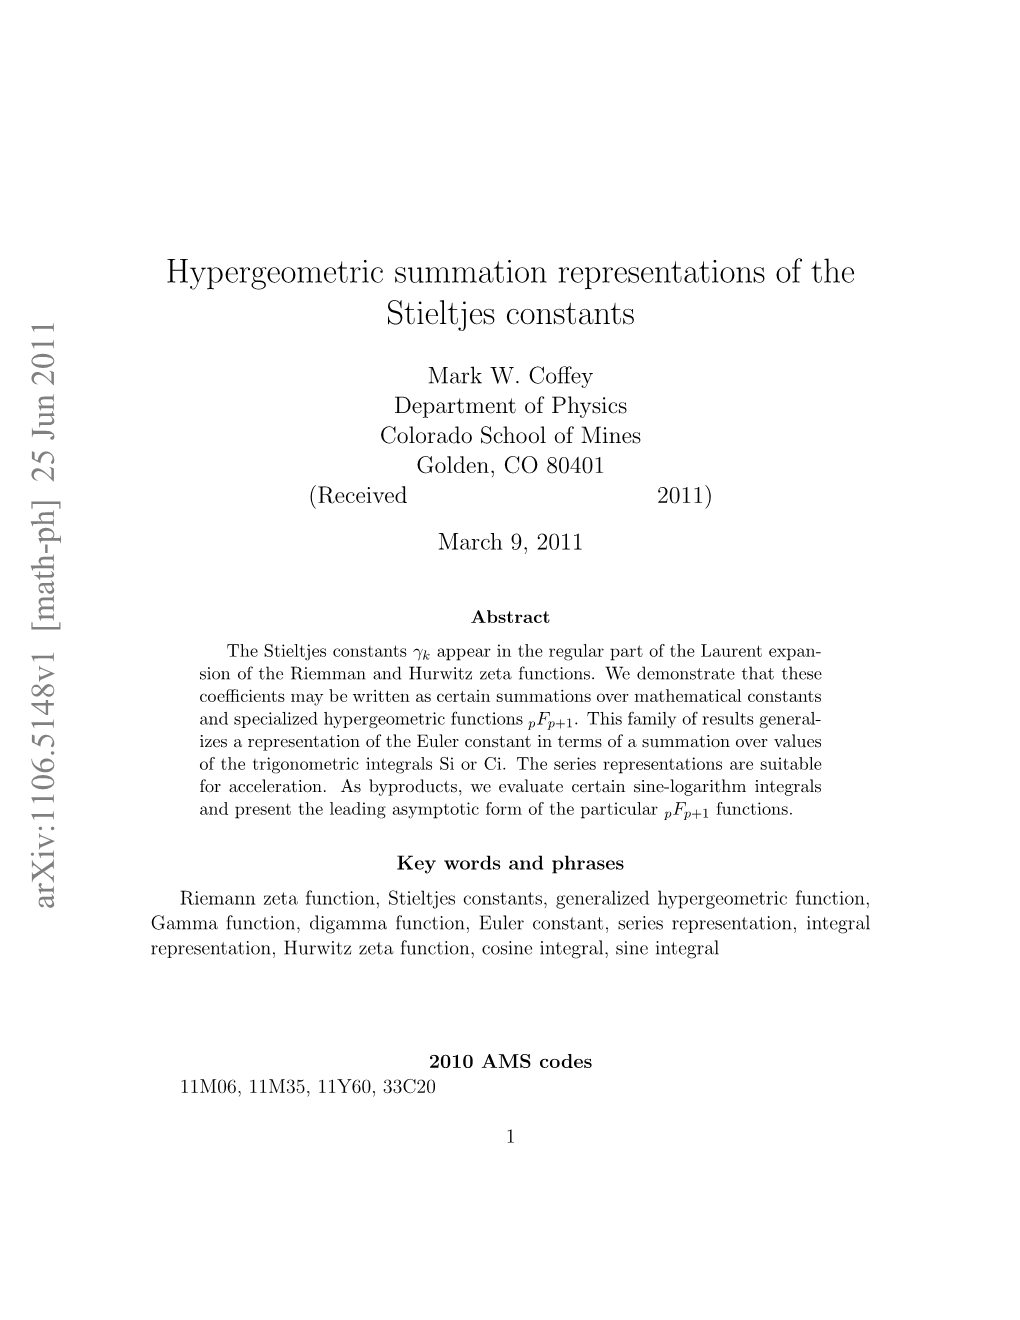 Hypergeometric Summation Representations of the Stieltjes